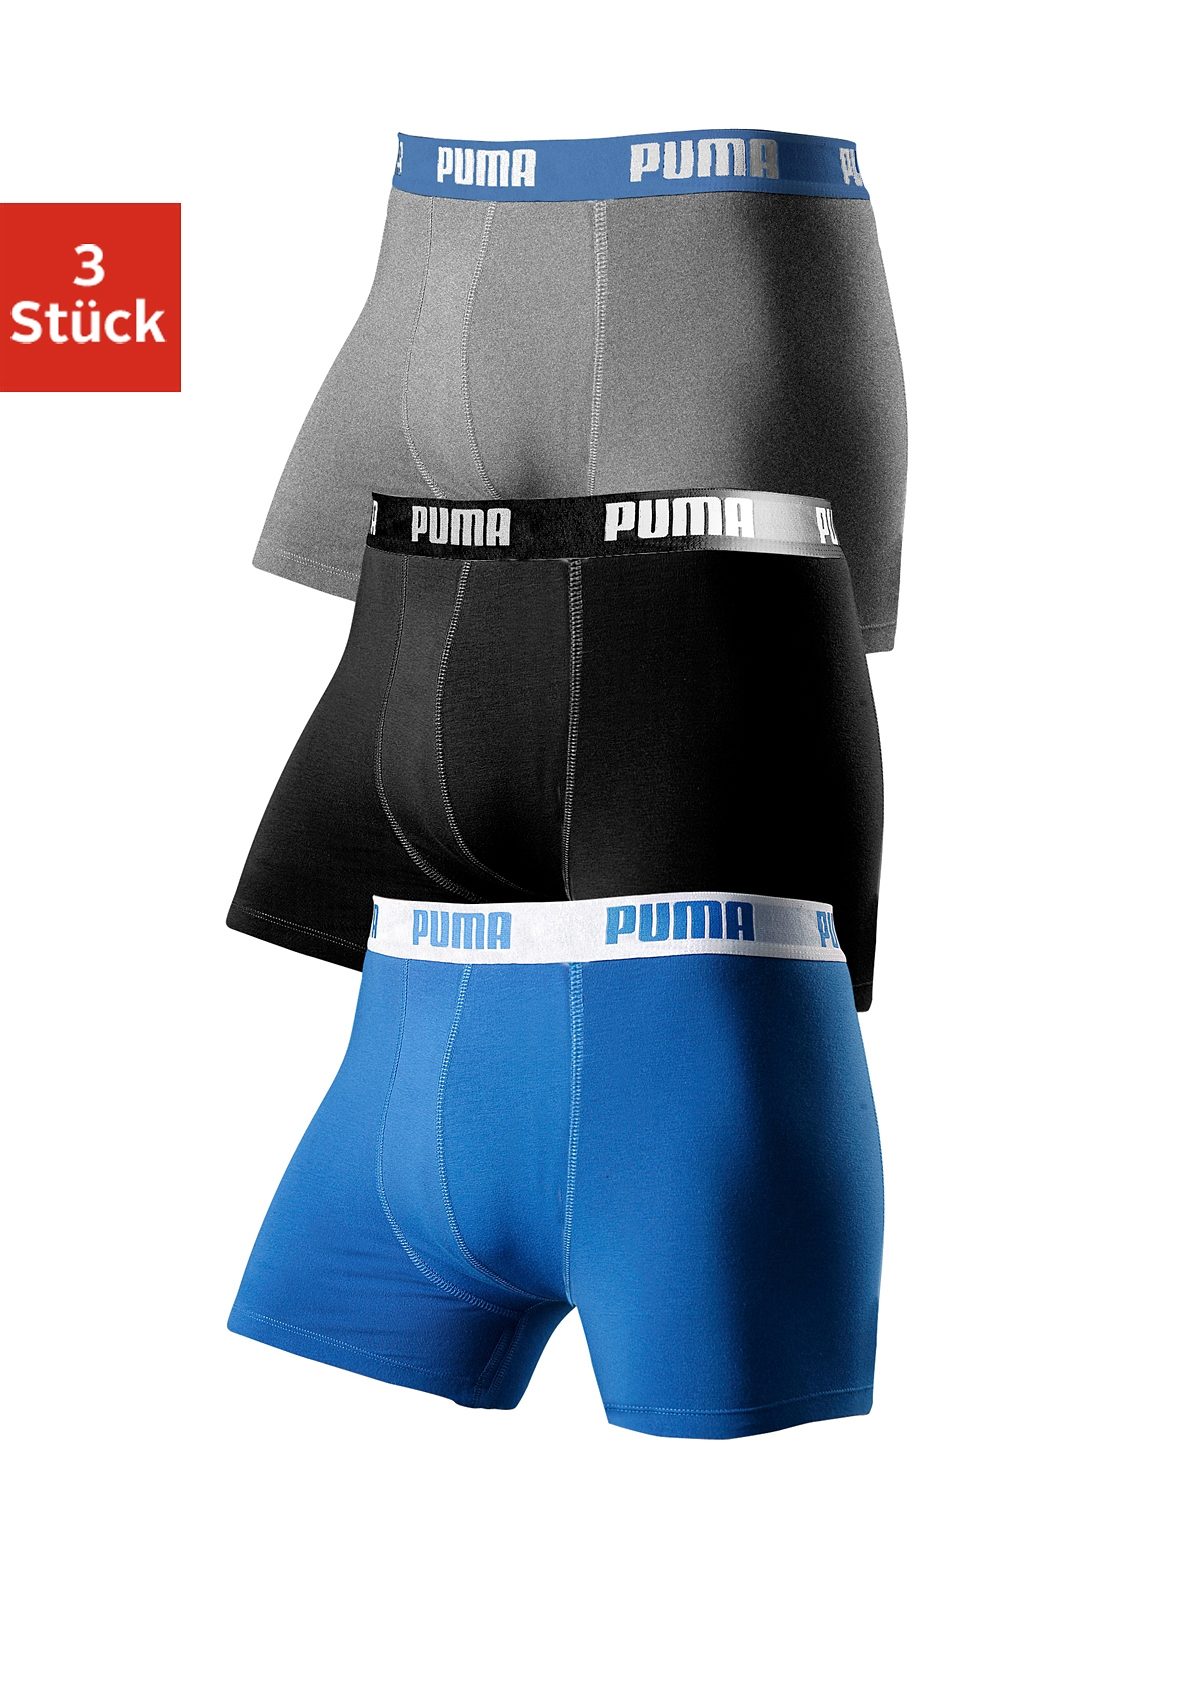 PUMA Retro Pants (3 Stück), Boxer in normaler Passform online kaufen | OTTO